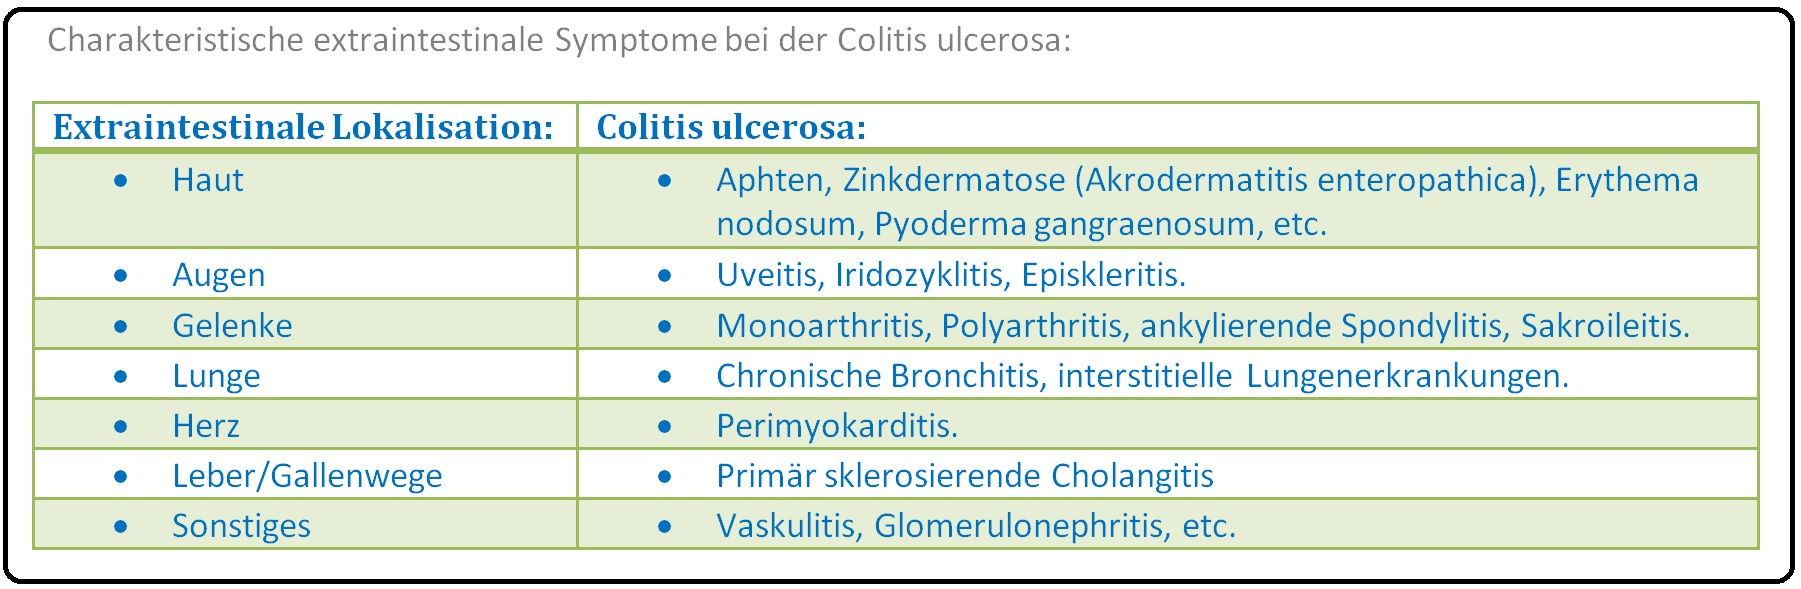 562 Charakteristische extraintestinale Symptome der Colitis ulcerosa